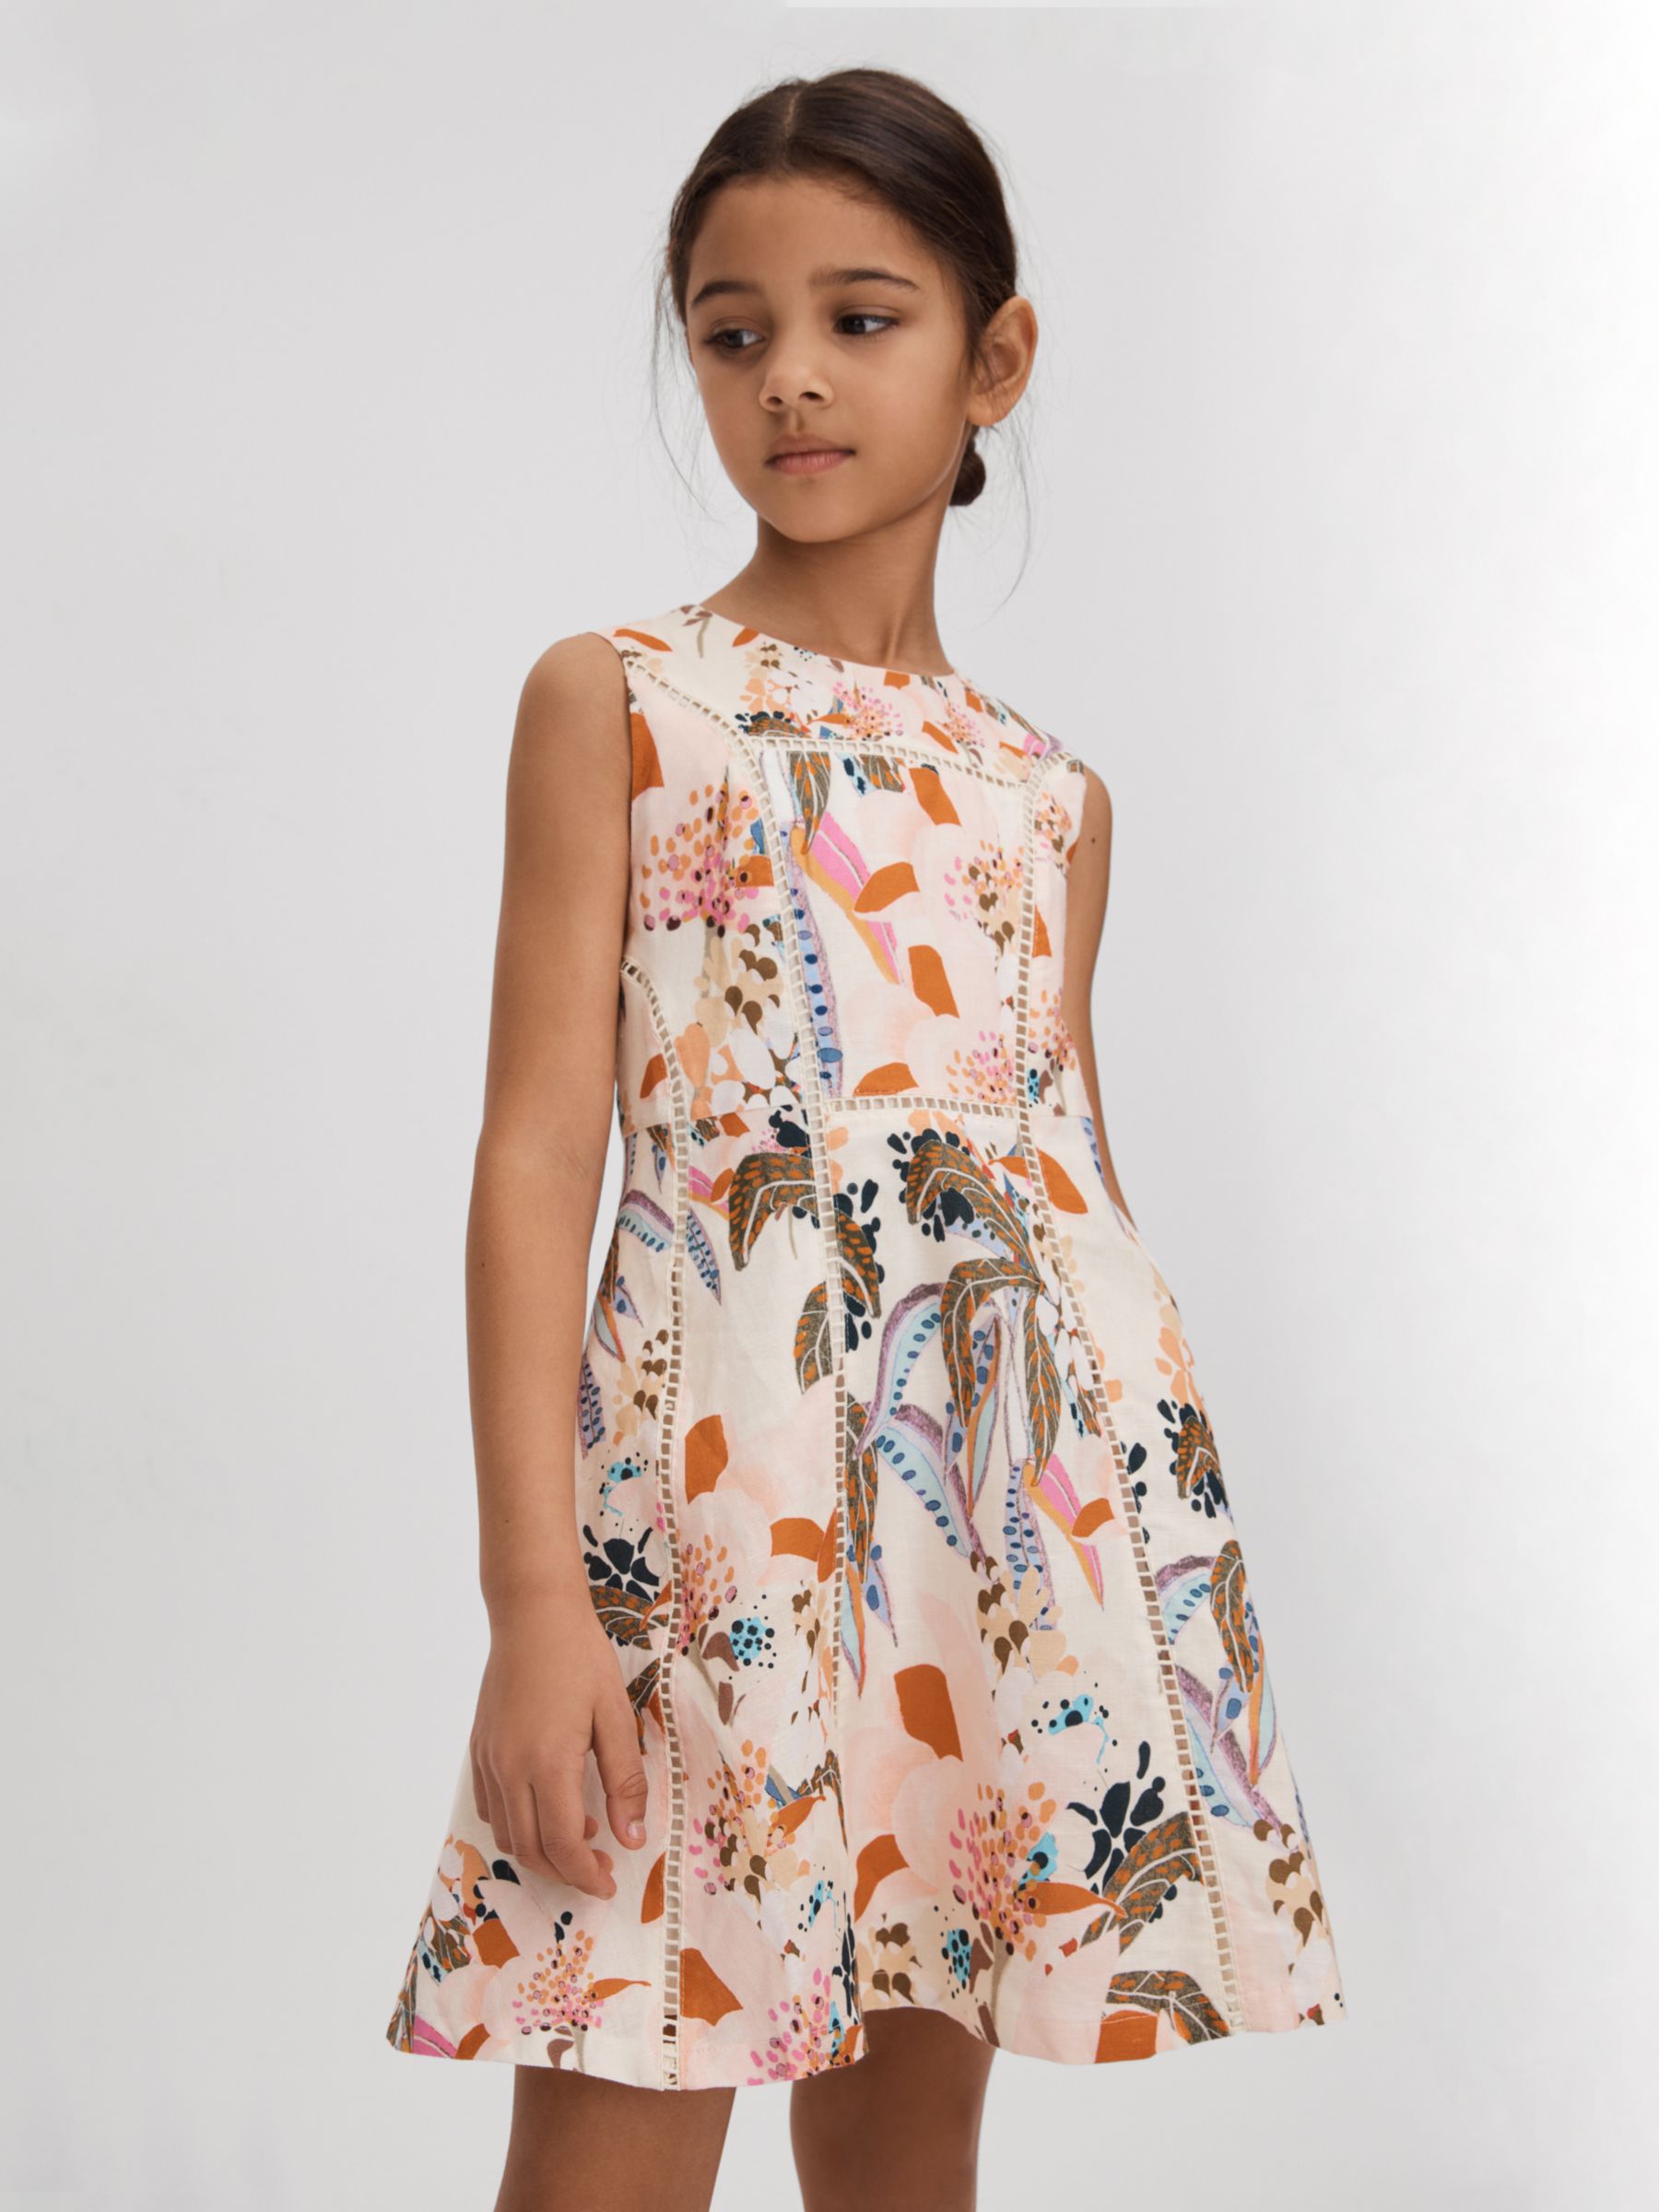 Reiss Kids' Lor Linen Blend Stitch Floral Print Dress, Pink, 4-5 years